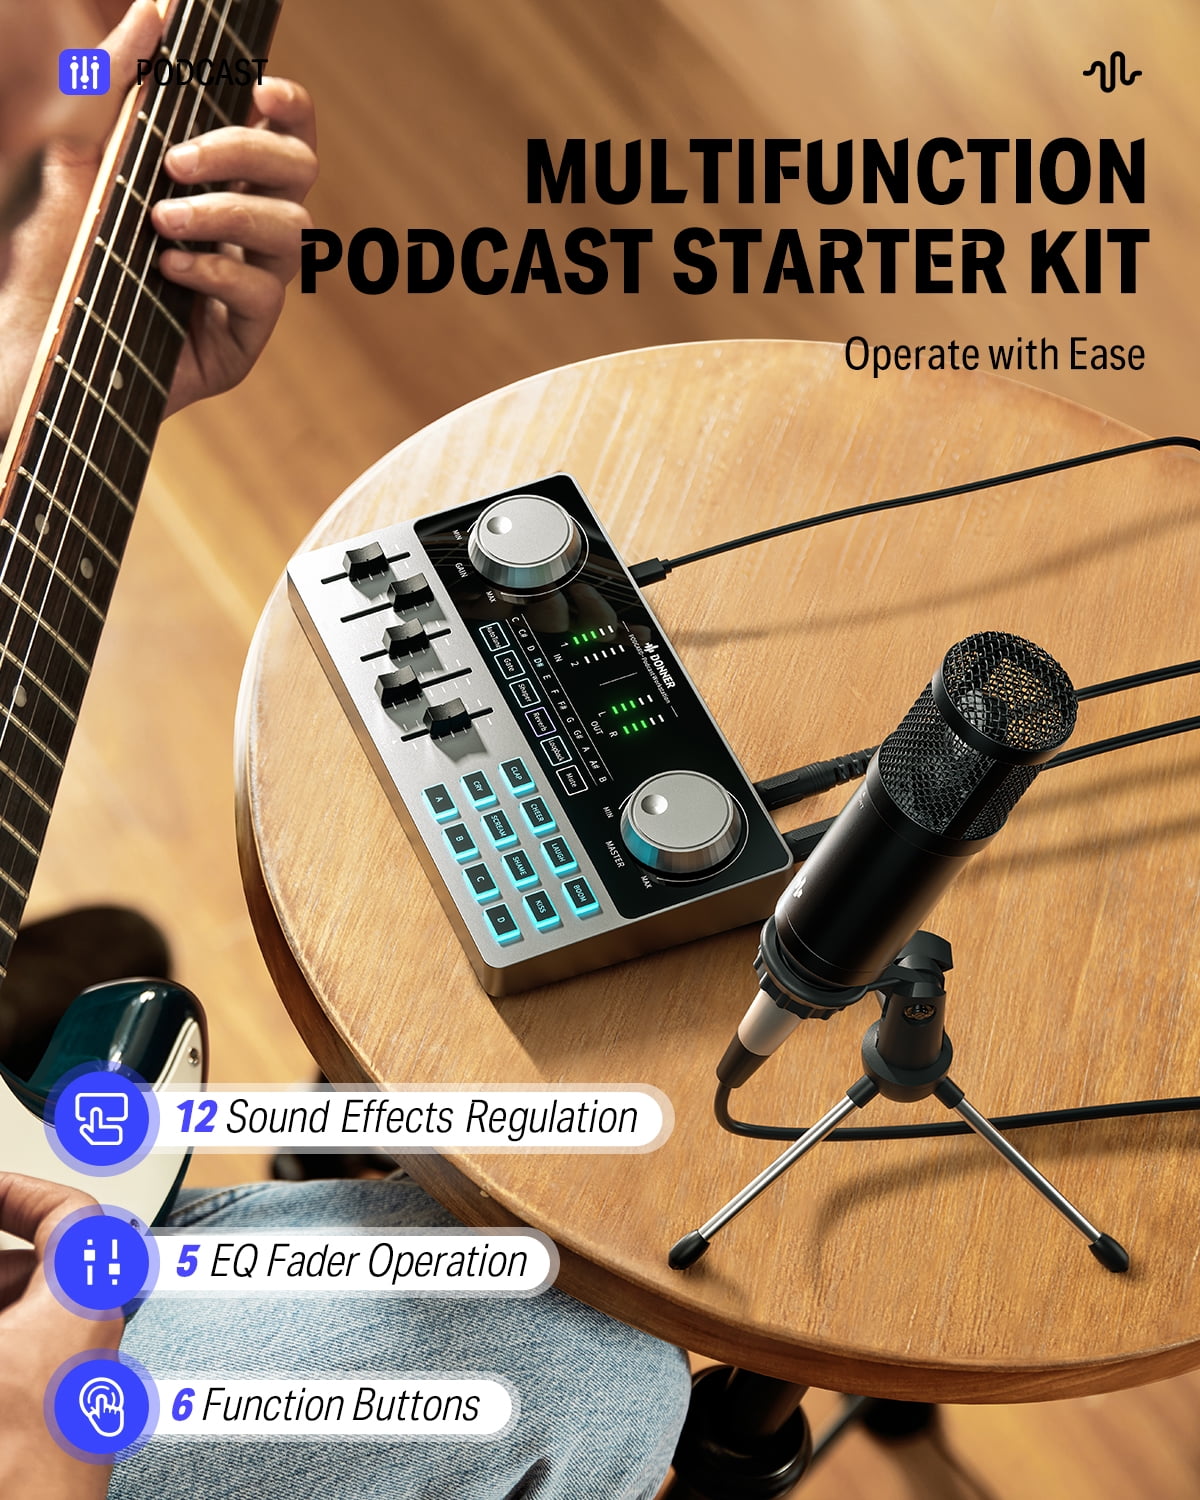 New equipment DIY Podcast Studio and lendable DIY Podcast Kit